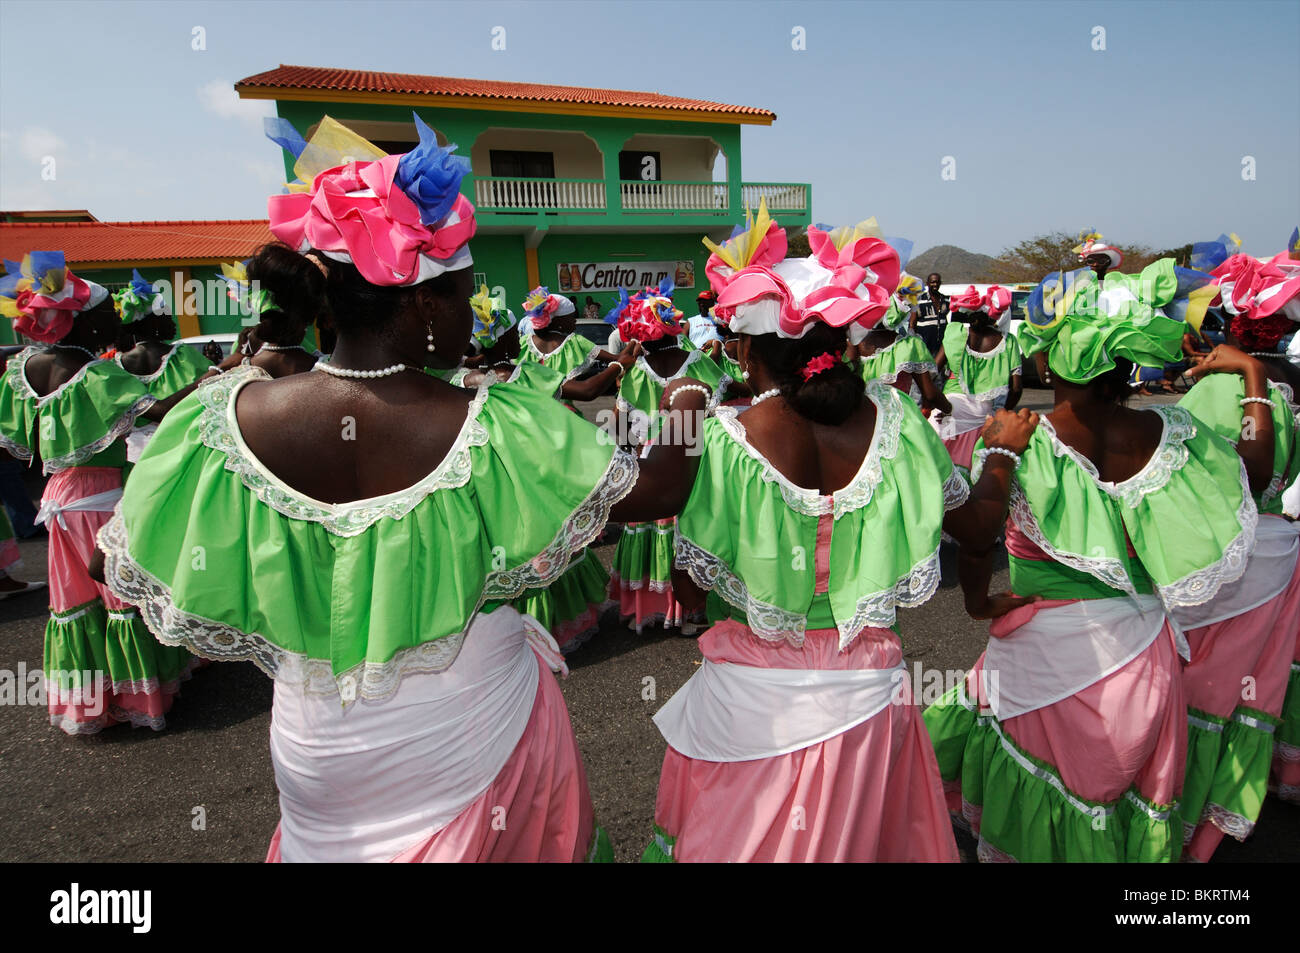 Curacao seu harvest festival parade hi-res stock photography and images -  Alamy